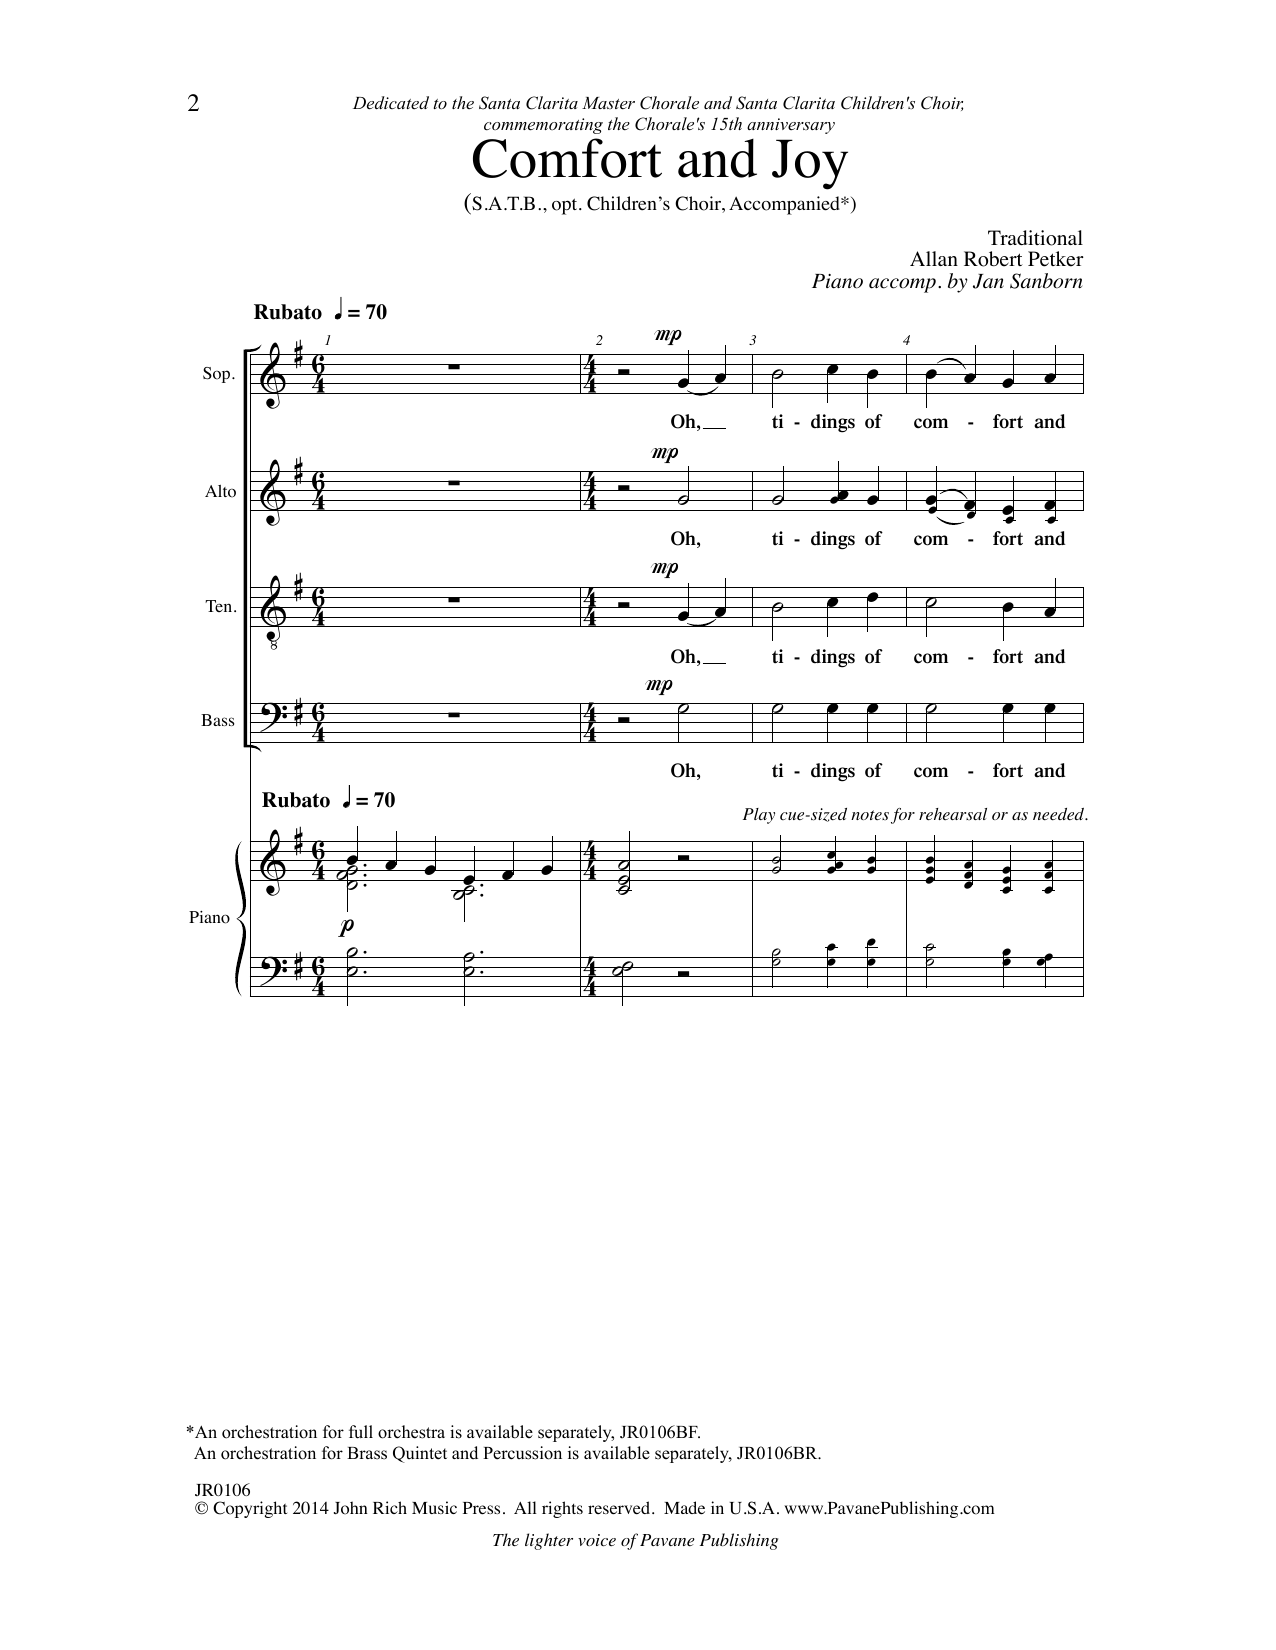 Allan Robert Petker Comfort and Joy Sheet Music Notes & Chords for Choral - Download or Print PDF